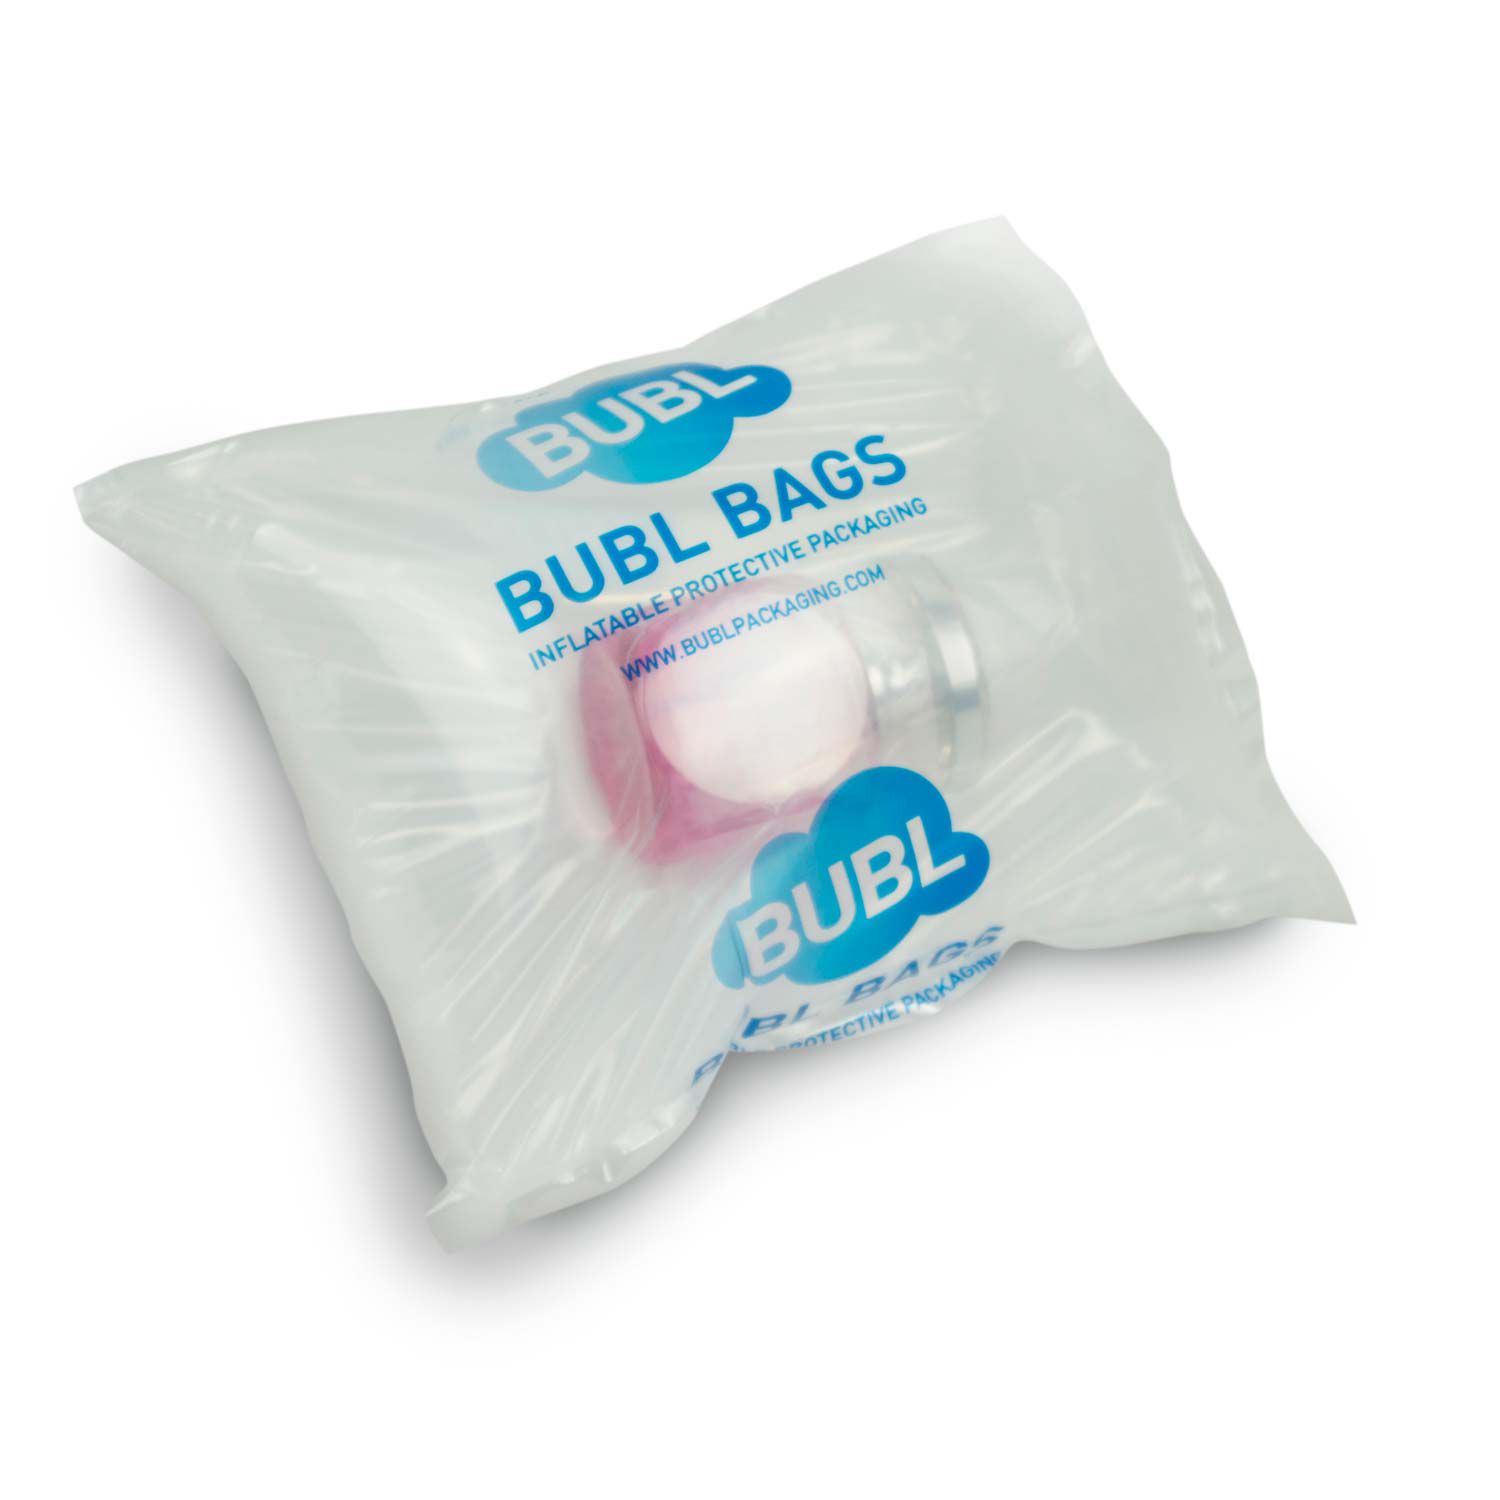 Bubble Packaging & Air Packs for using as postal packaging